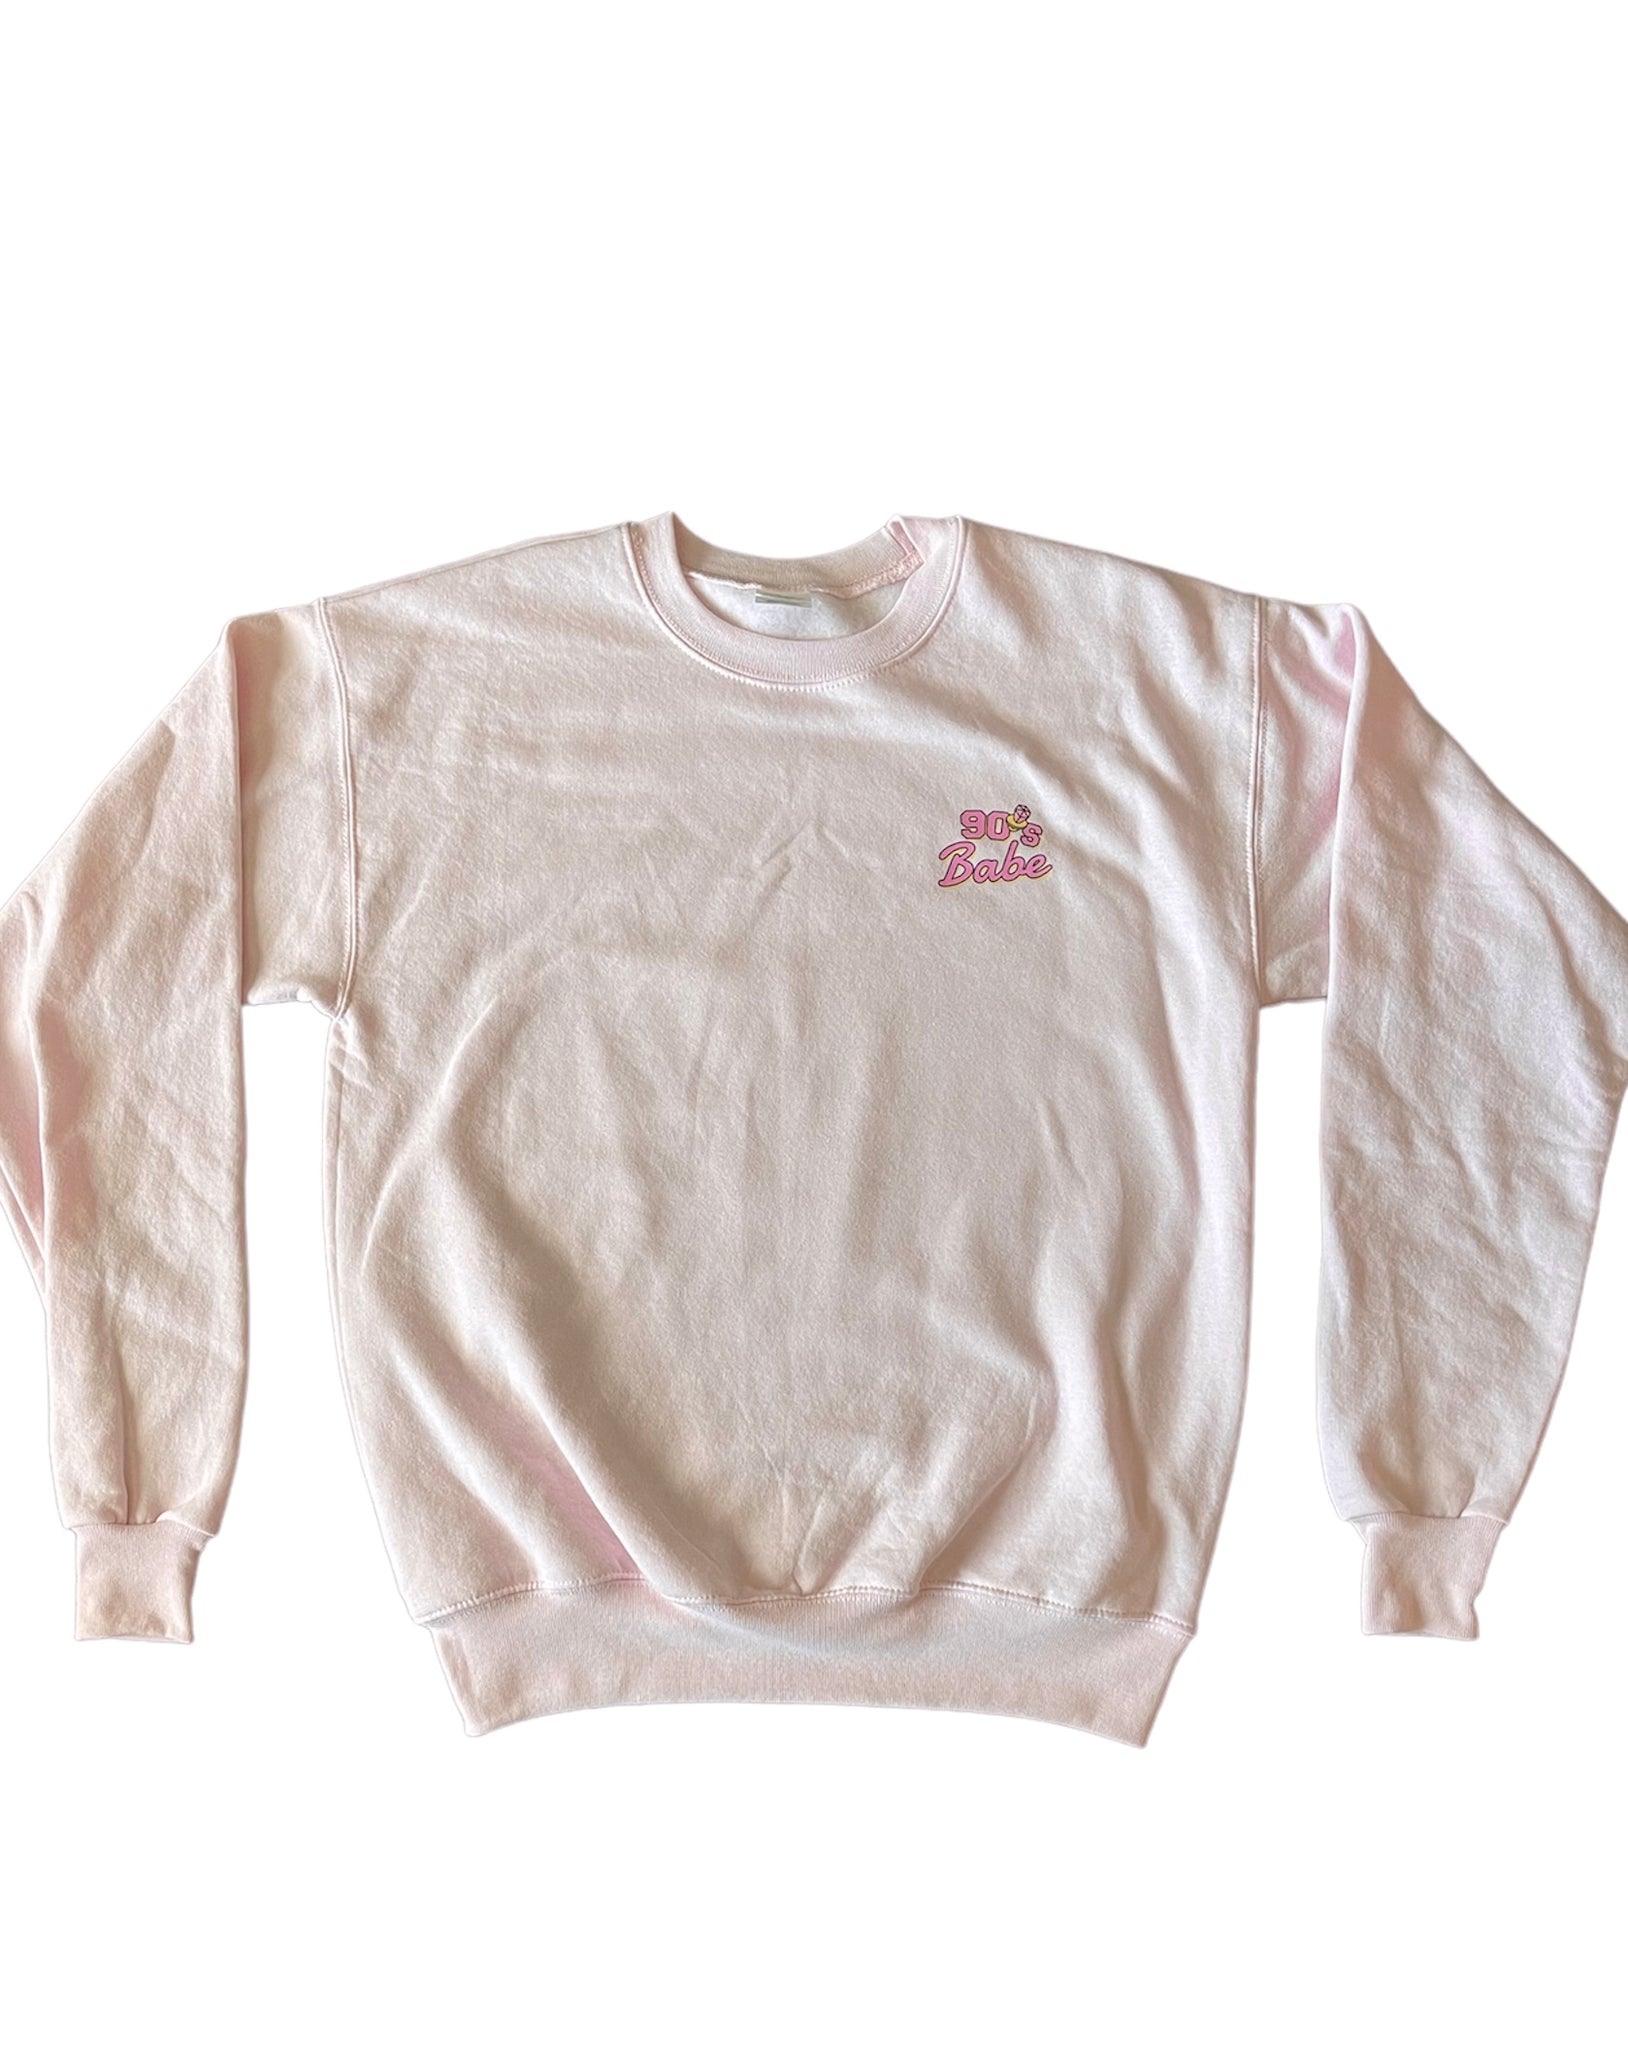 Small Pink 90s babe Sweatshirt